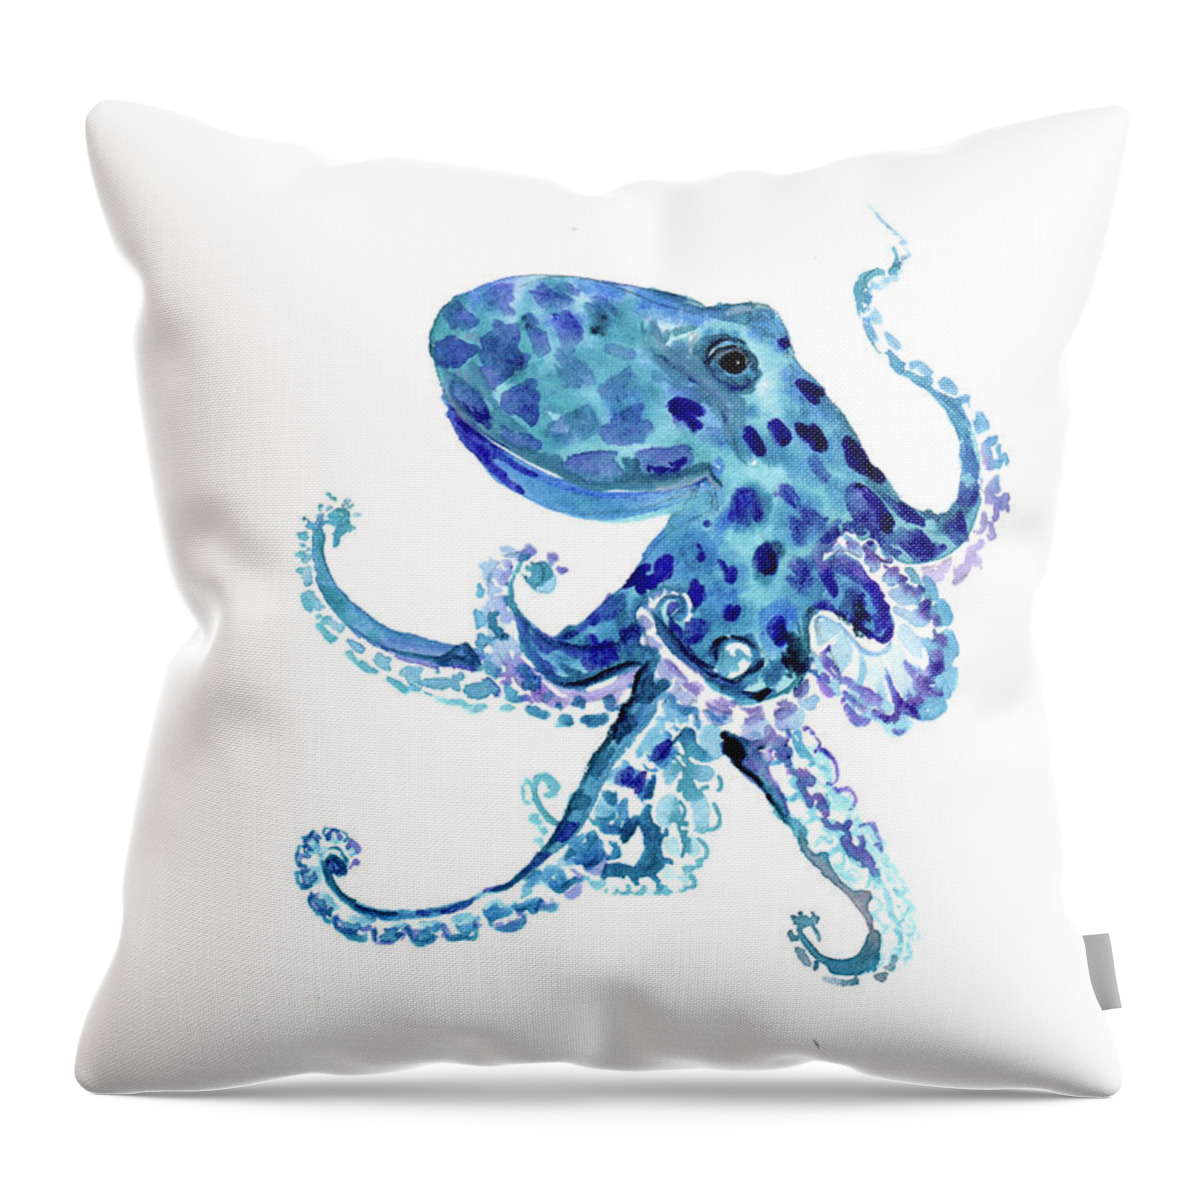 Octopus Art Throw Pillow featuring the painting Blue Octopus by Suren Nersisyan